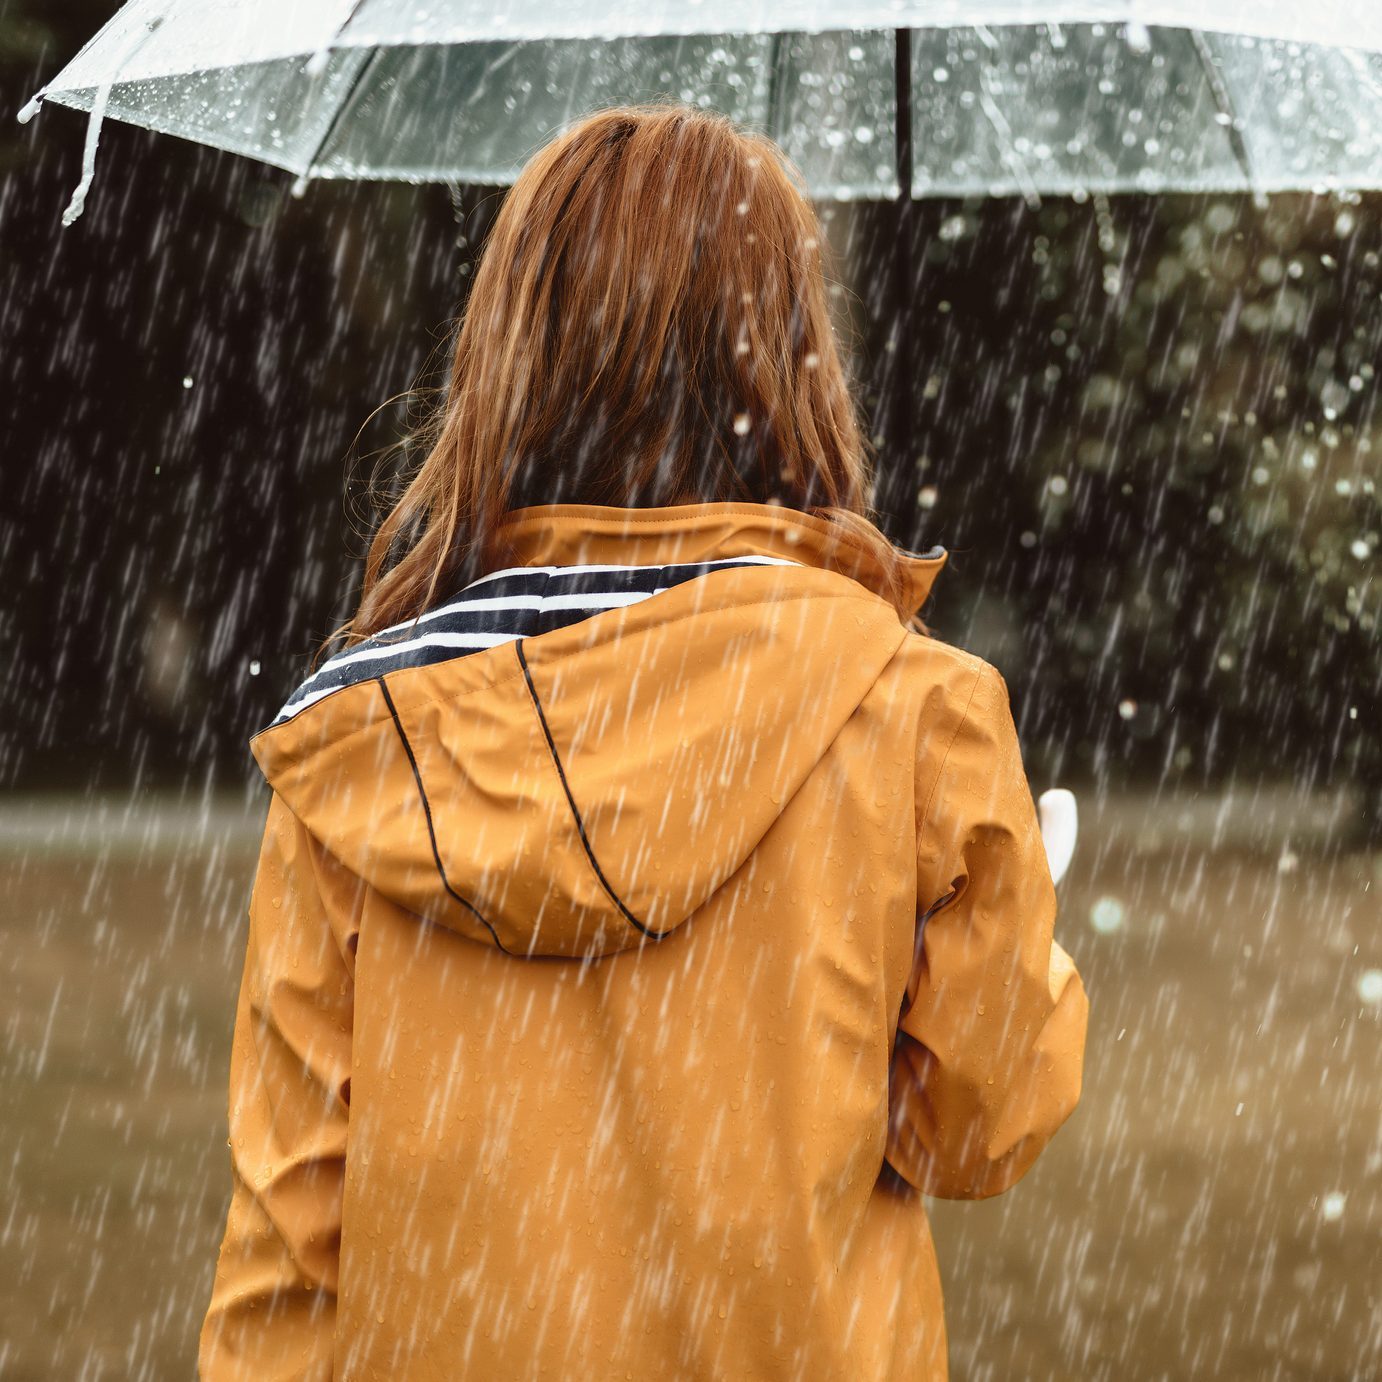 Female walking during rain outside